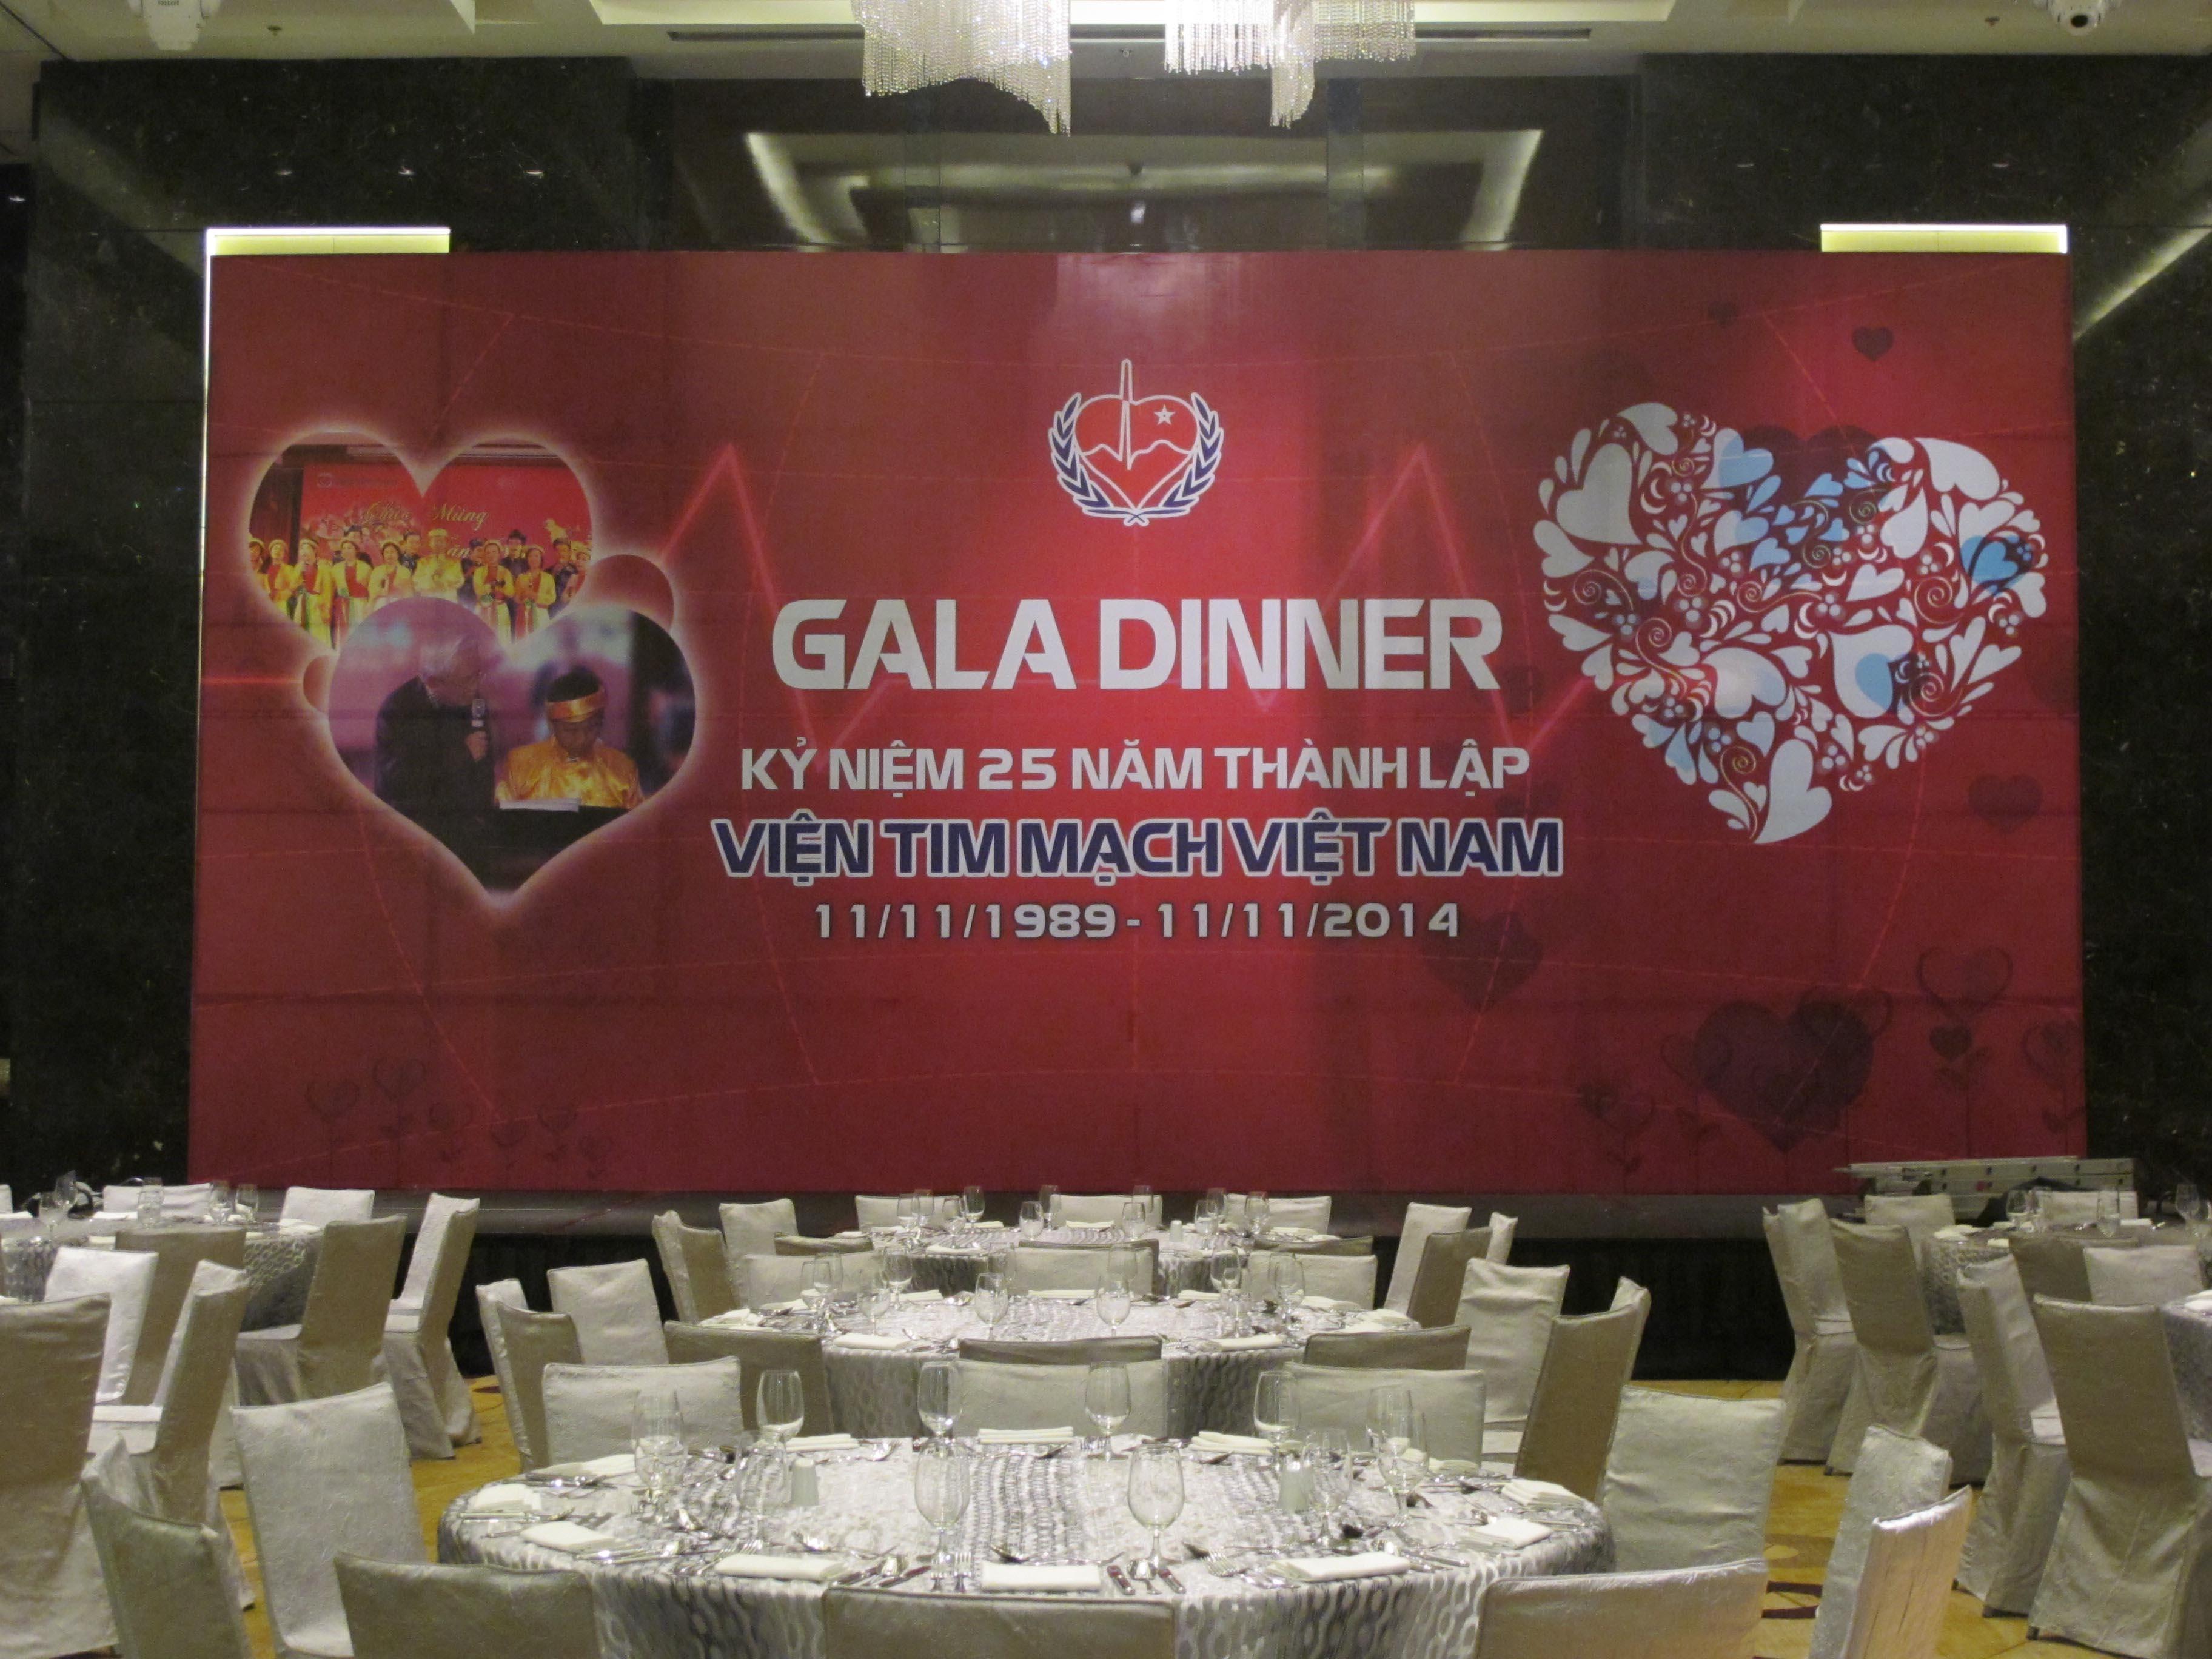 Backdrop sự kiện gala dinner